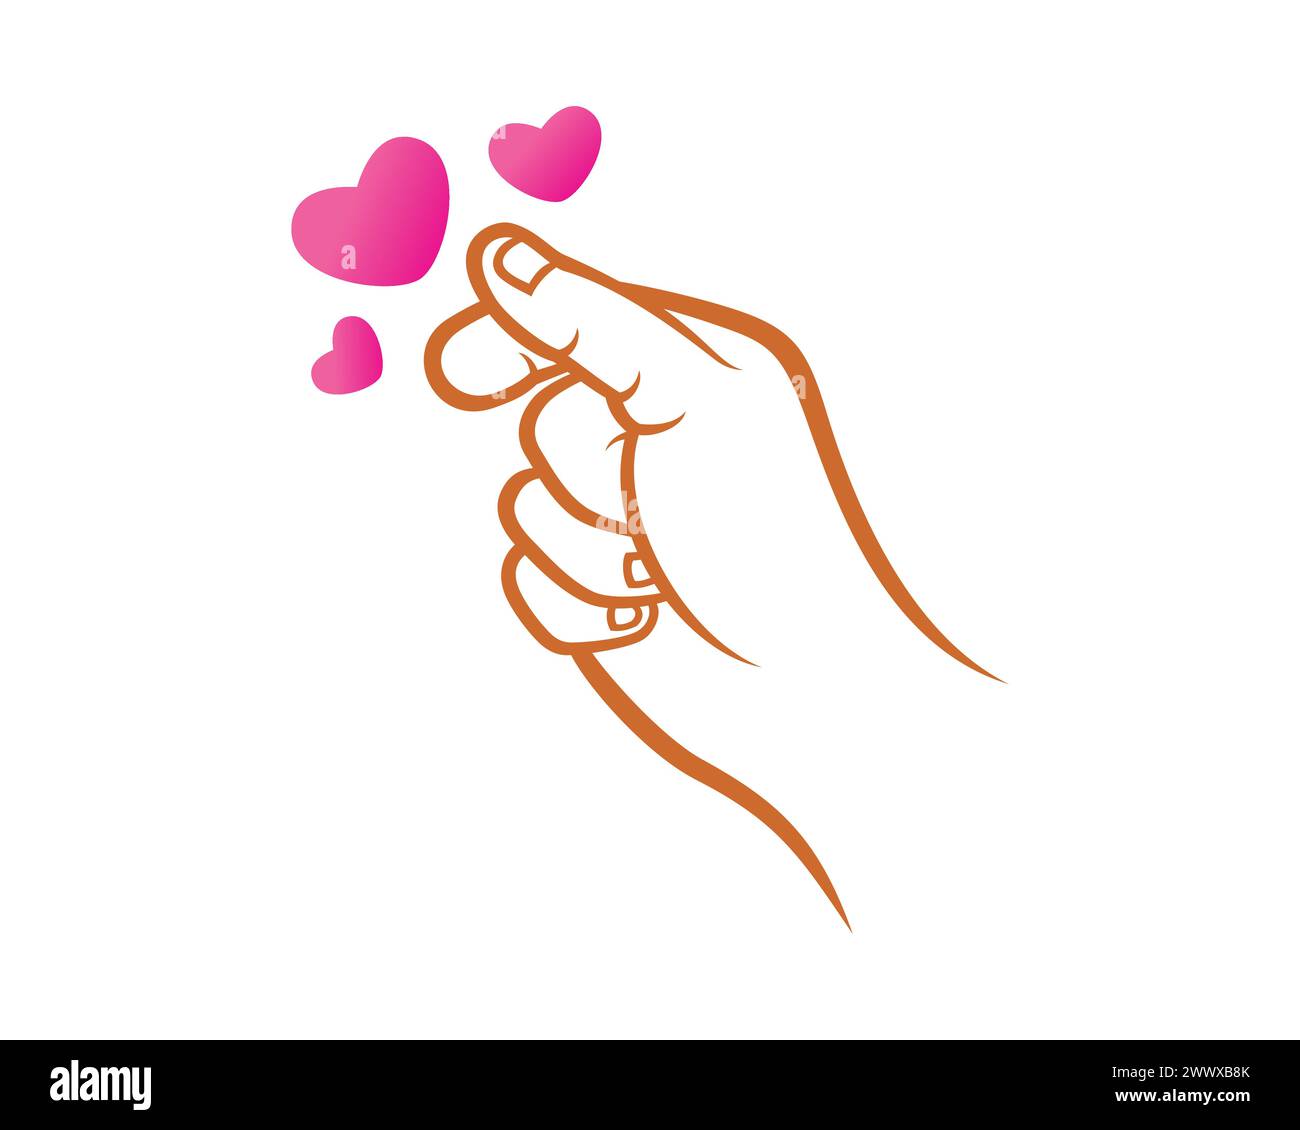 Korean Love Hand Sign Top View Illustration Stock Vector